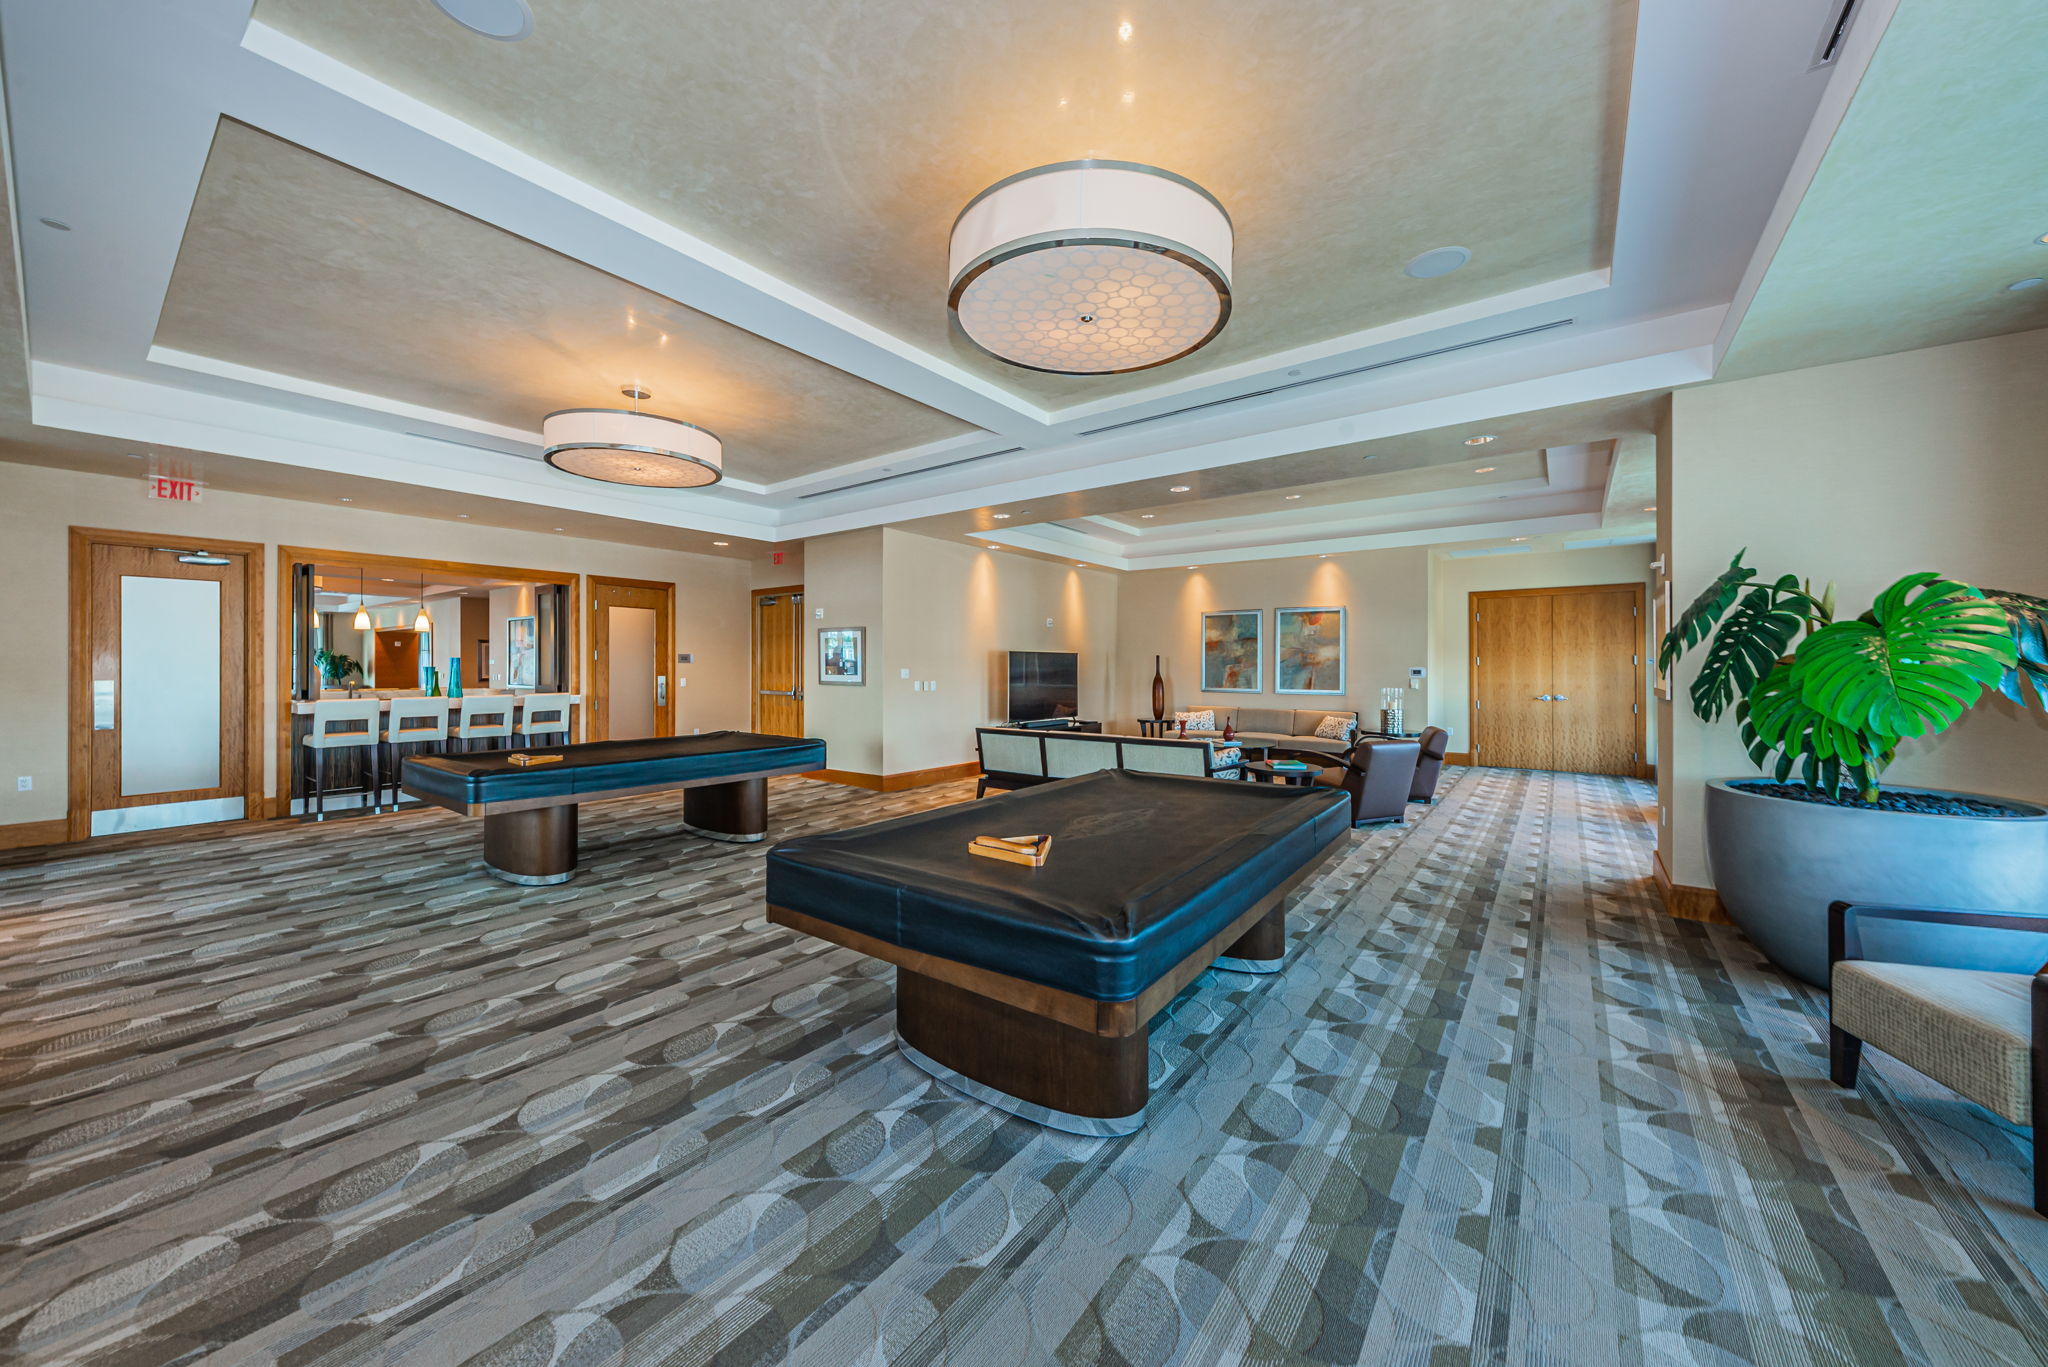 43-Billiards Room